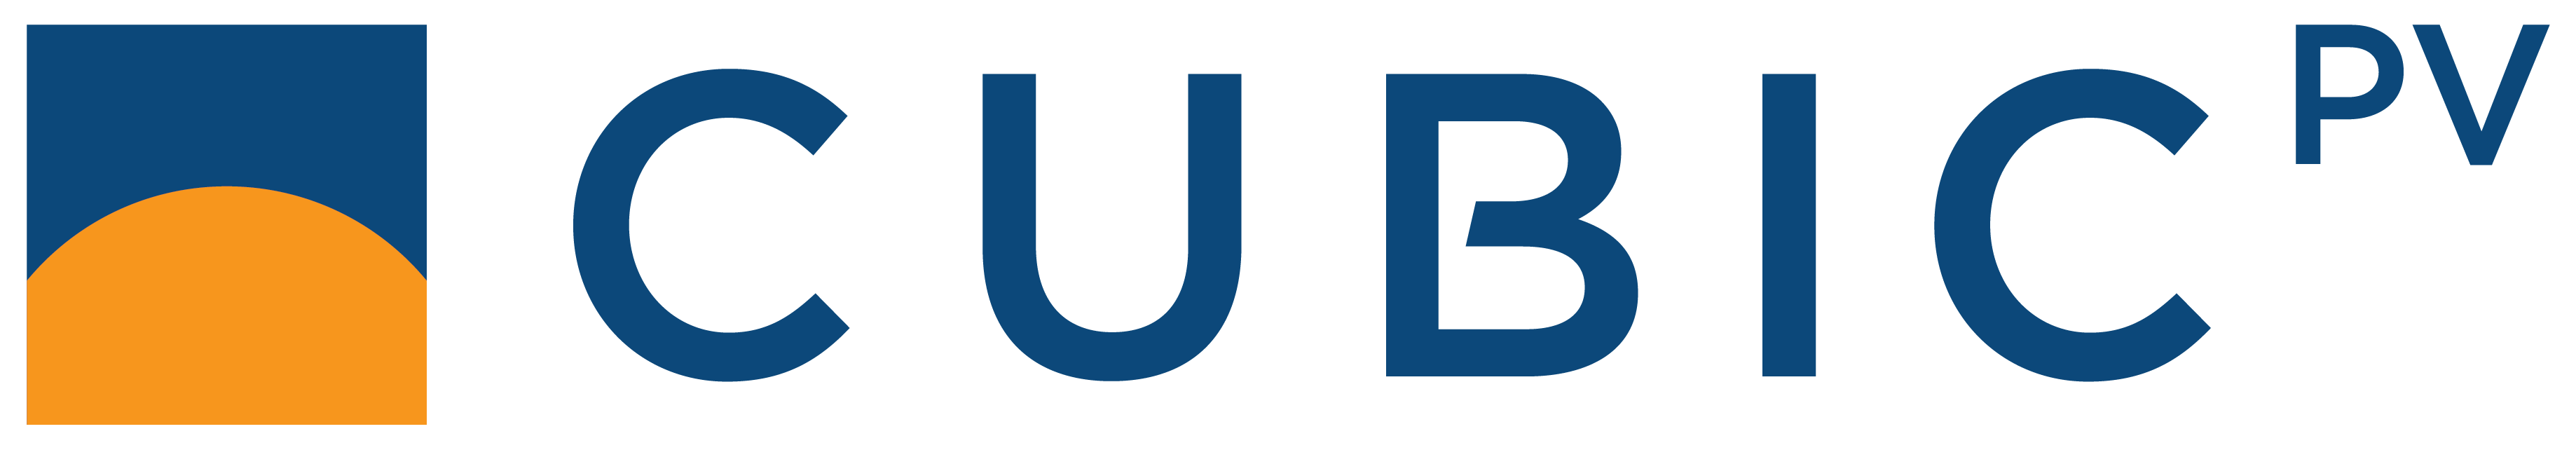 CubicPV logo